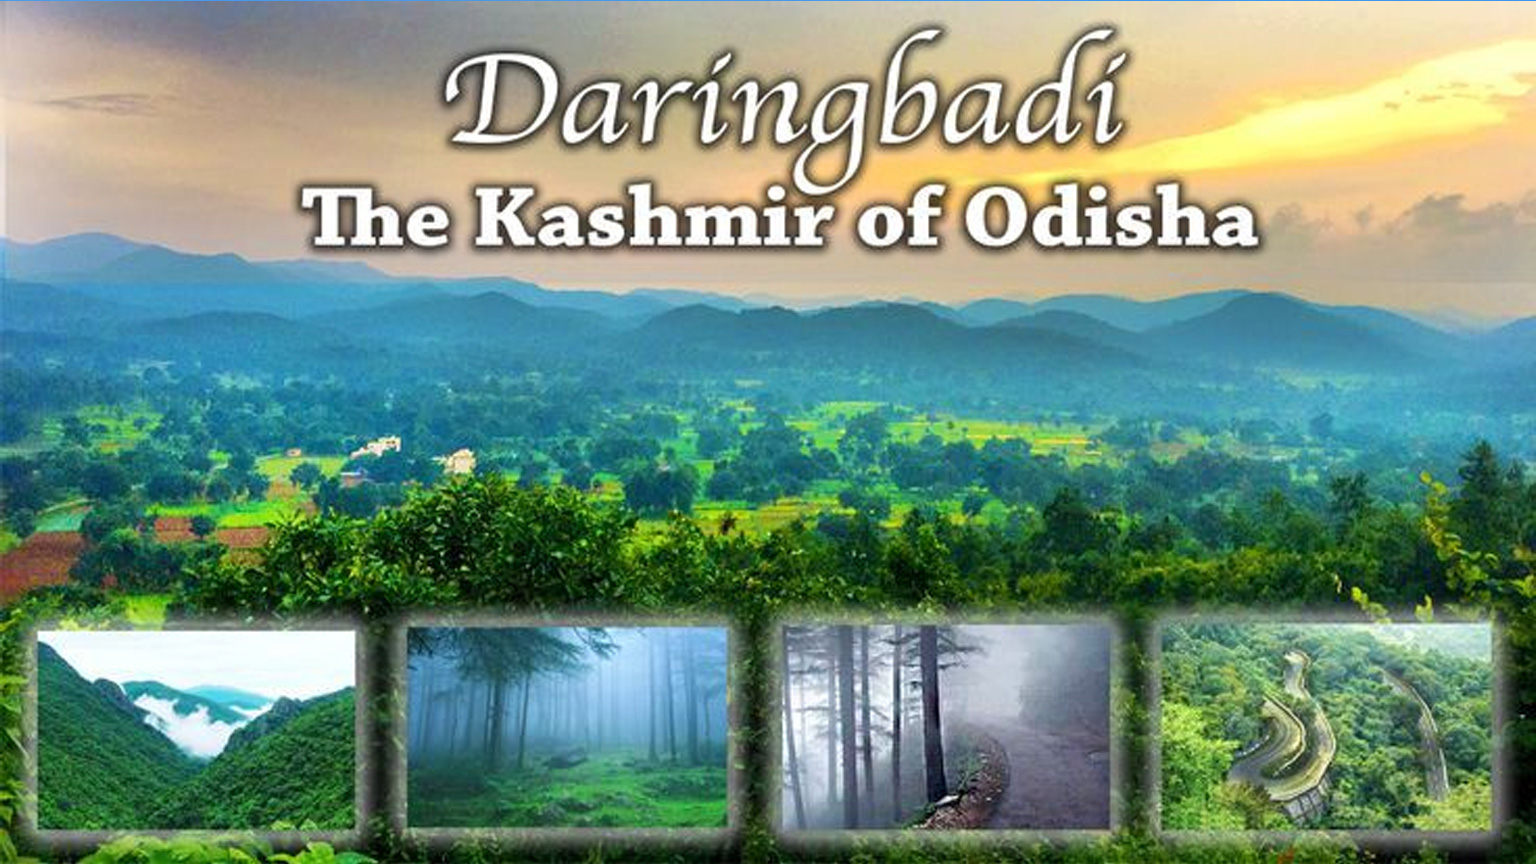 Plan Summer vacation at Daringbadi the Kashmir of Odisha